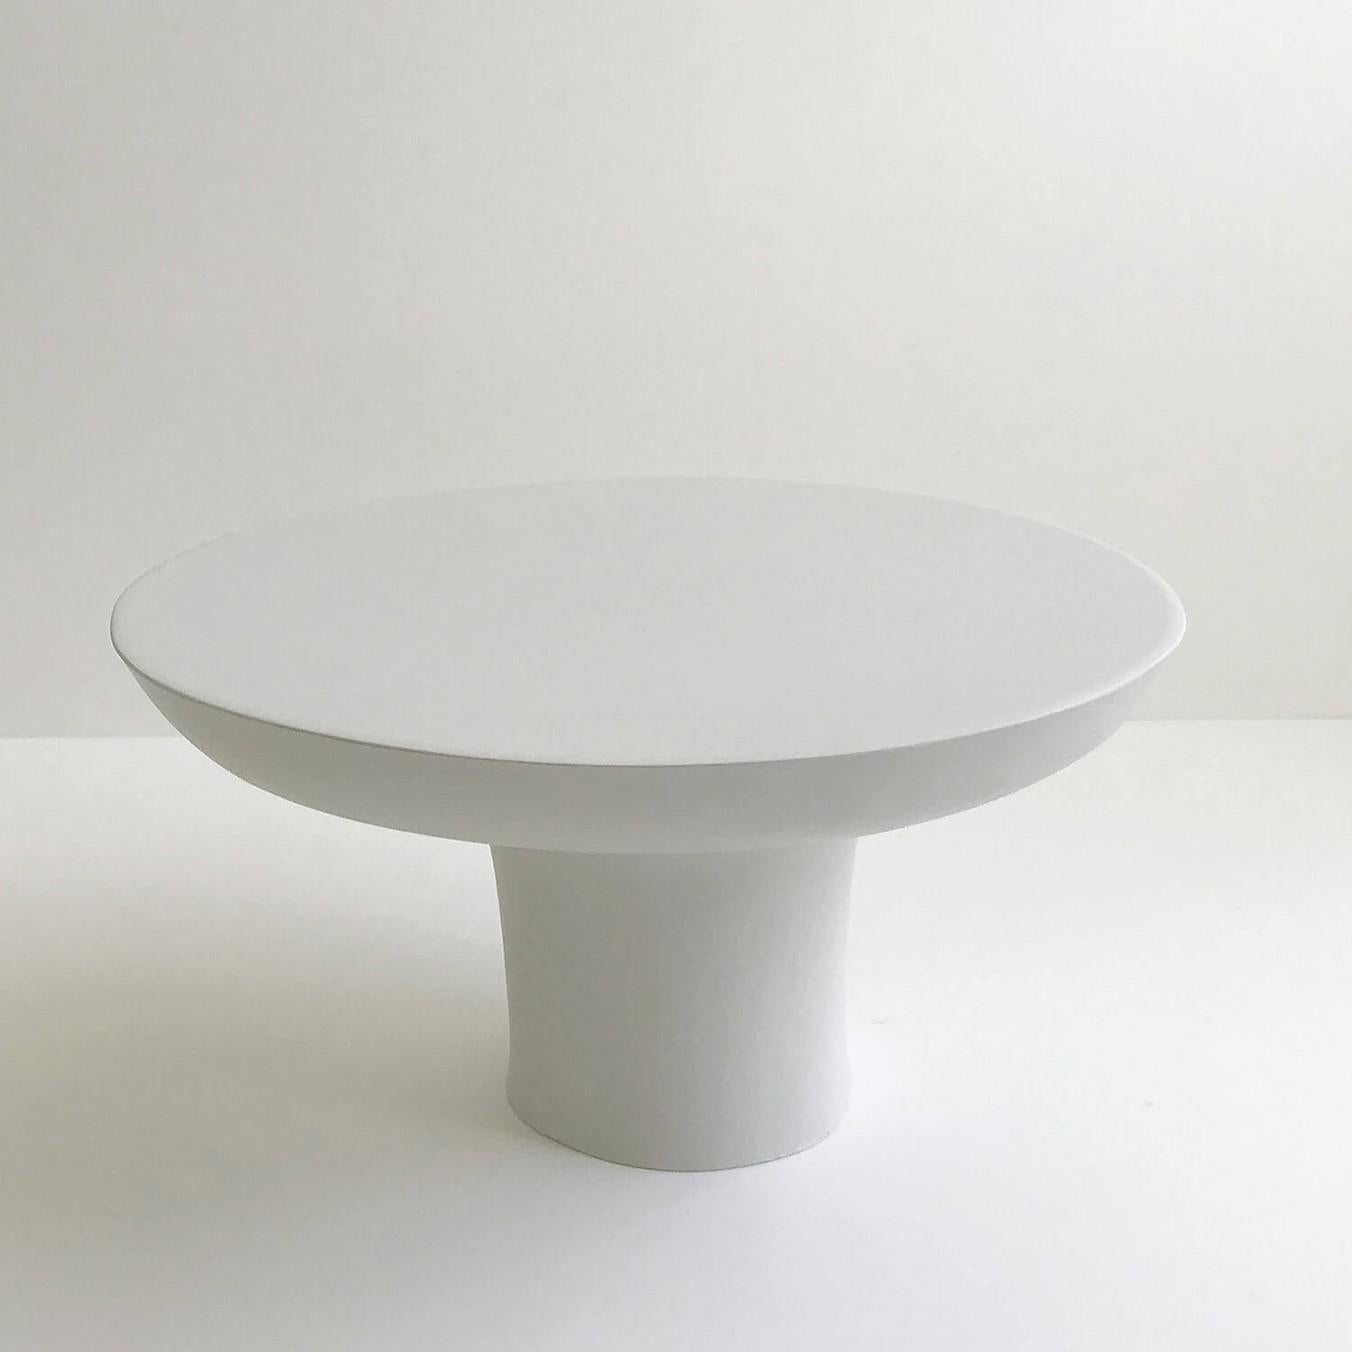 Contemporary Jesmonite platter - Curved platter by Malgorzata Bany

Design: Malgorzata Bany
Material: Jesmonite stone (resin based plaster)

Dimensions (in): 12.5 x 6.29